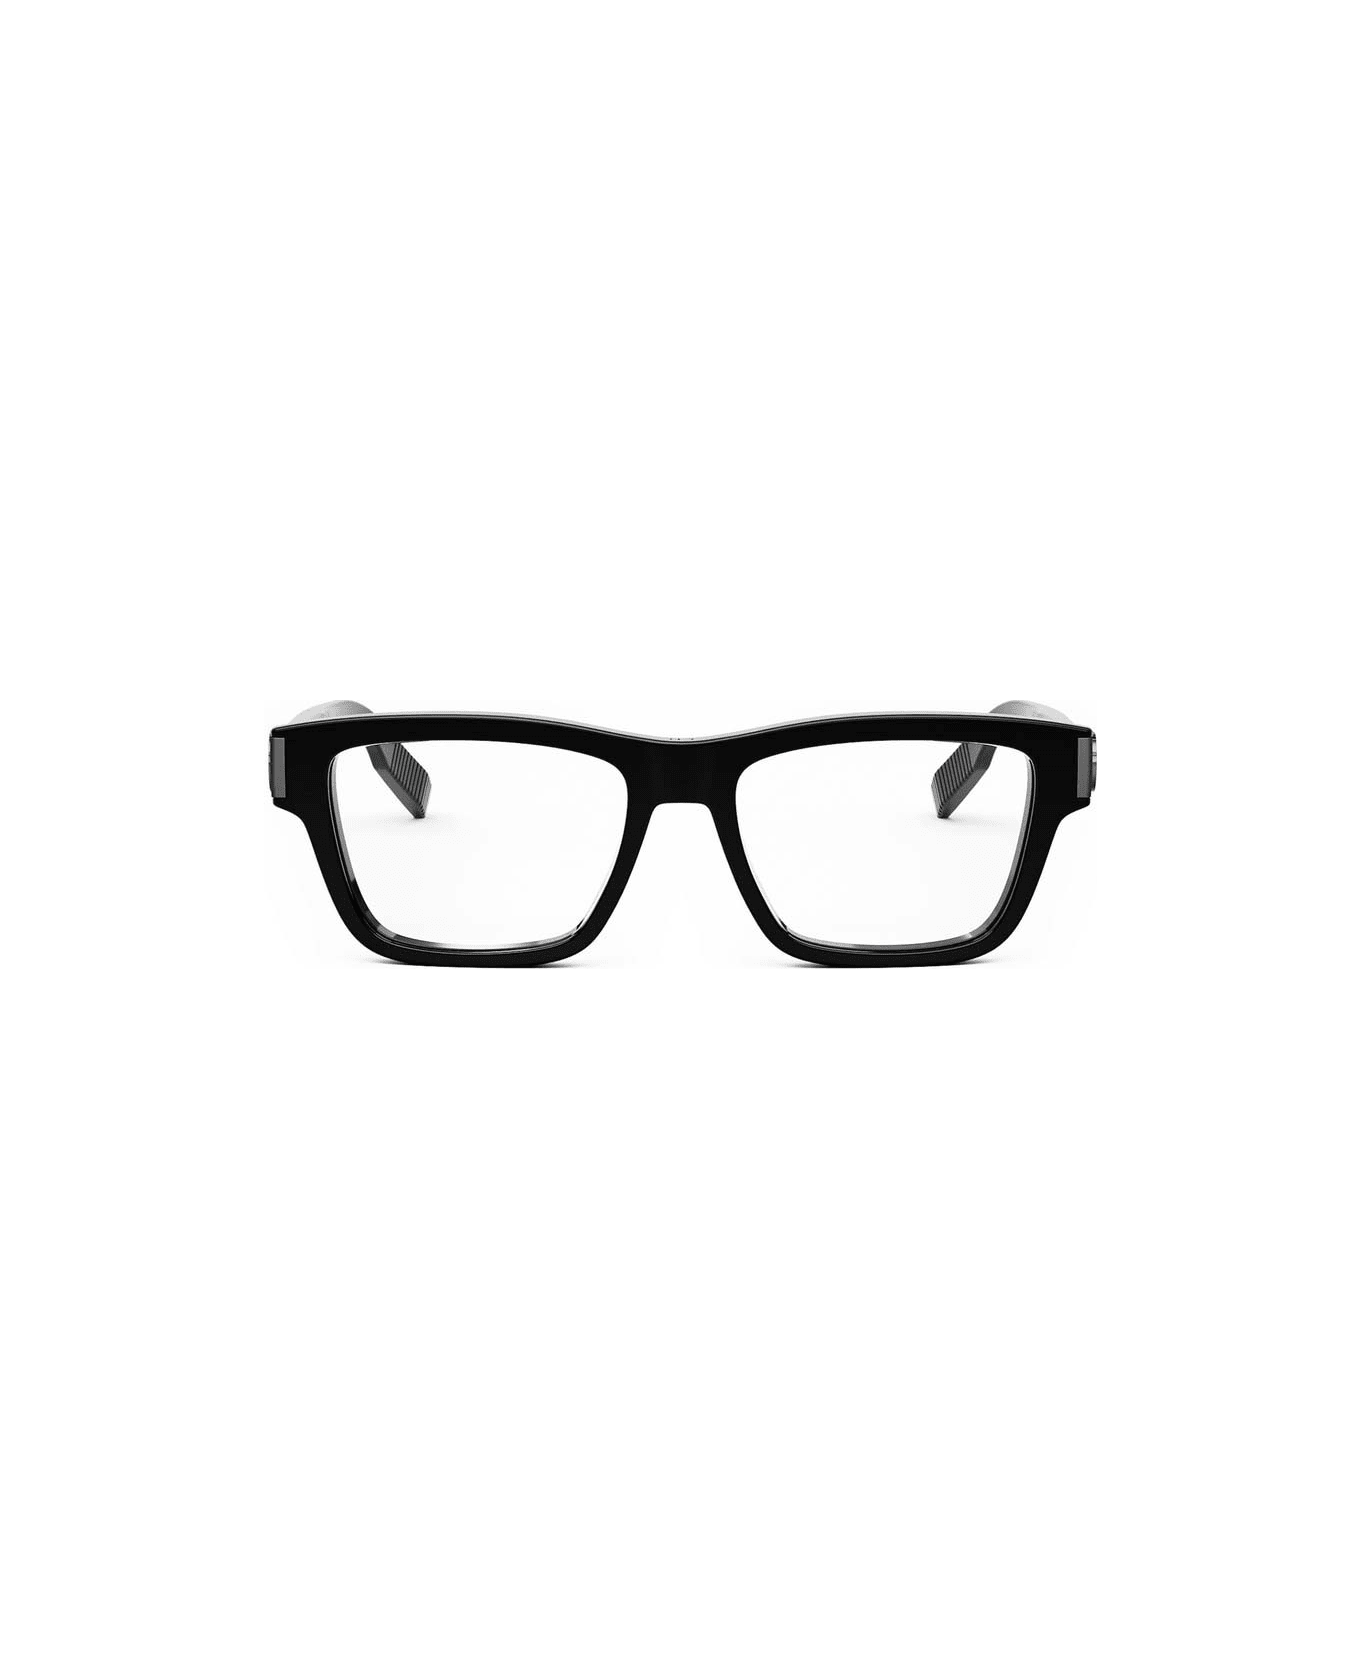 Dior Eyewear Glasses - Nero アイウェア